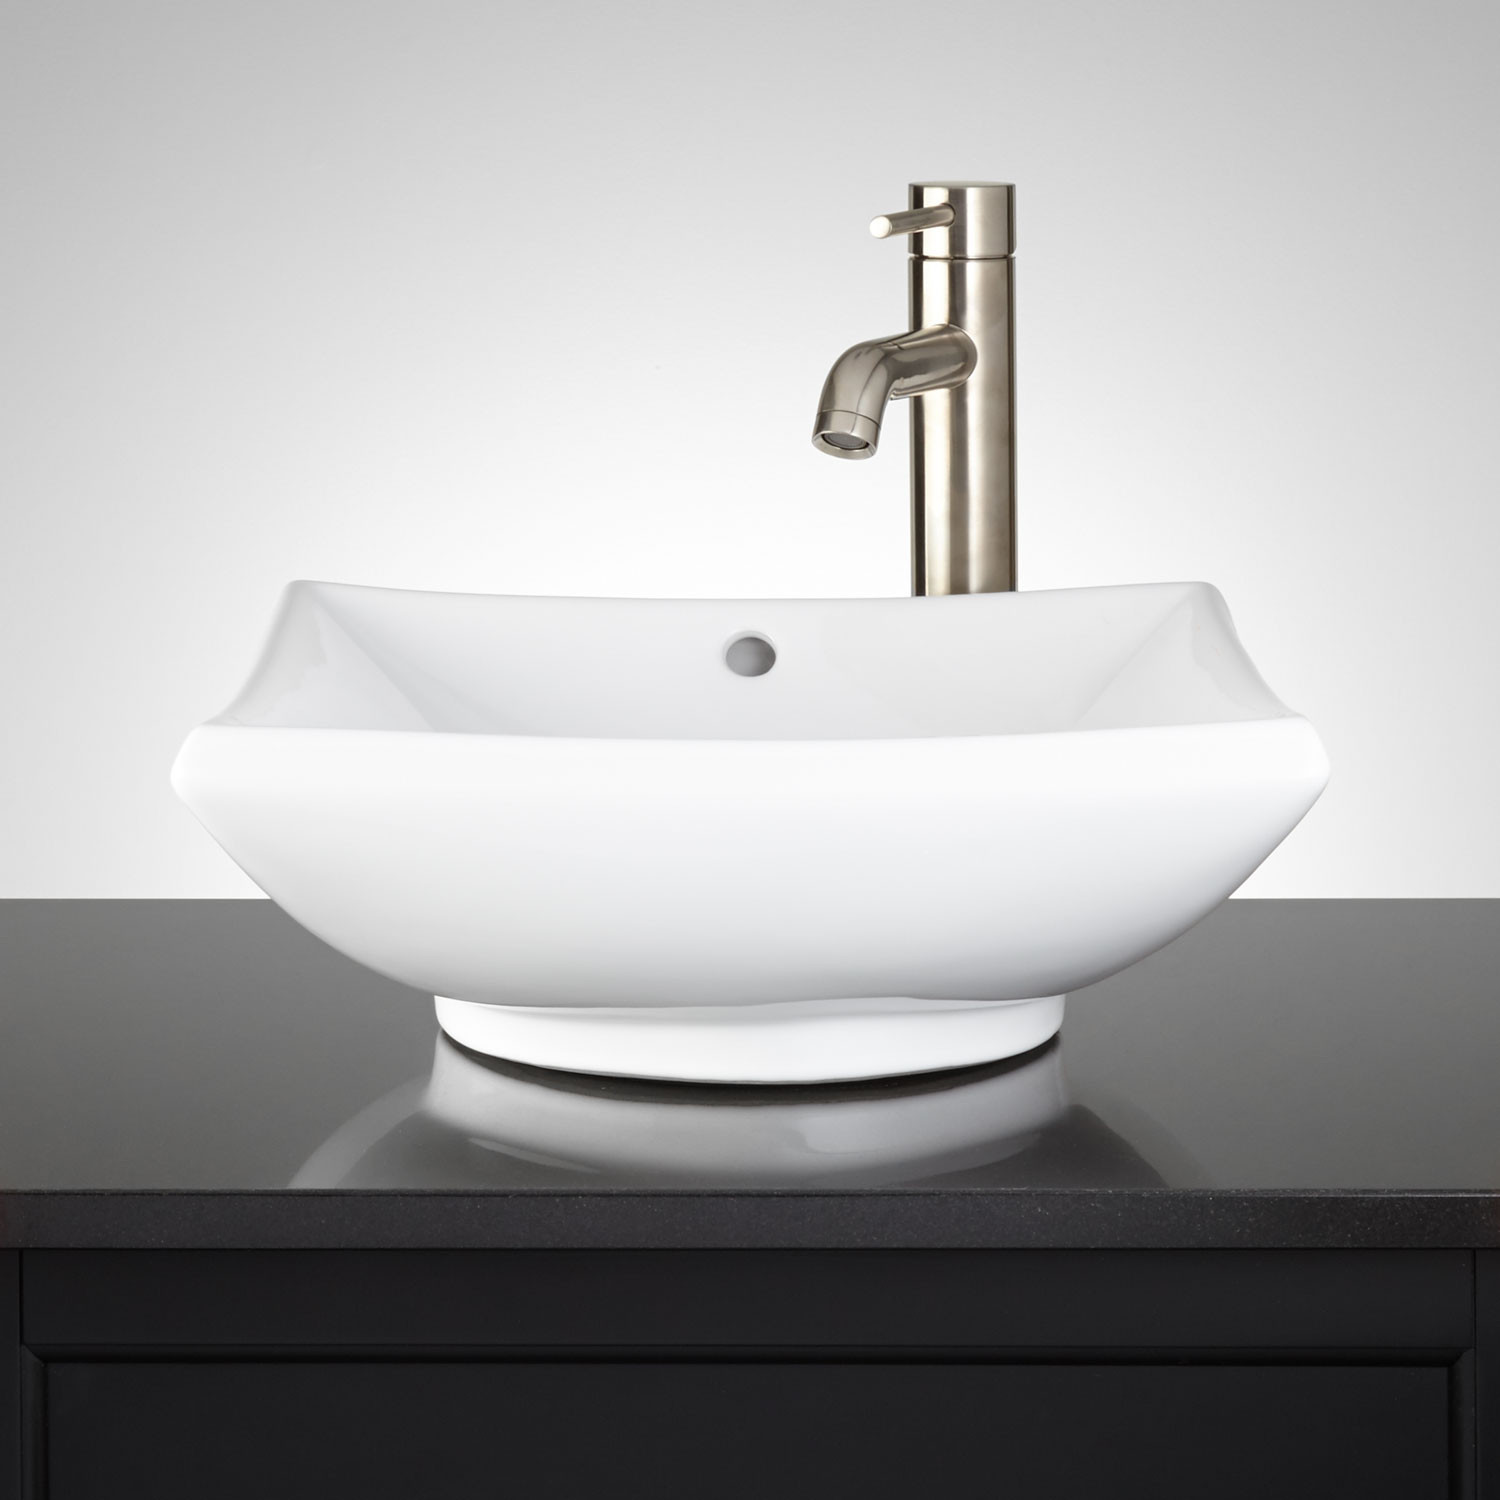 Best ideas about Vessel Bathroom Sinks
. Save or Pin Emilyse Square Porcelain Vessel Sink Vessel Sinks Now.